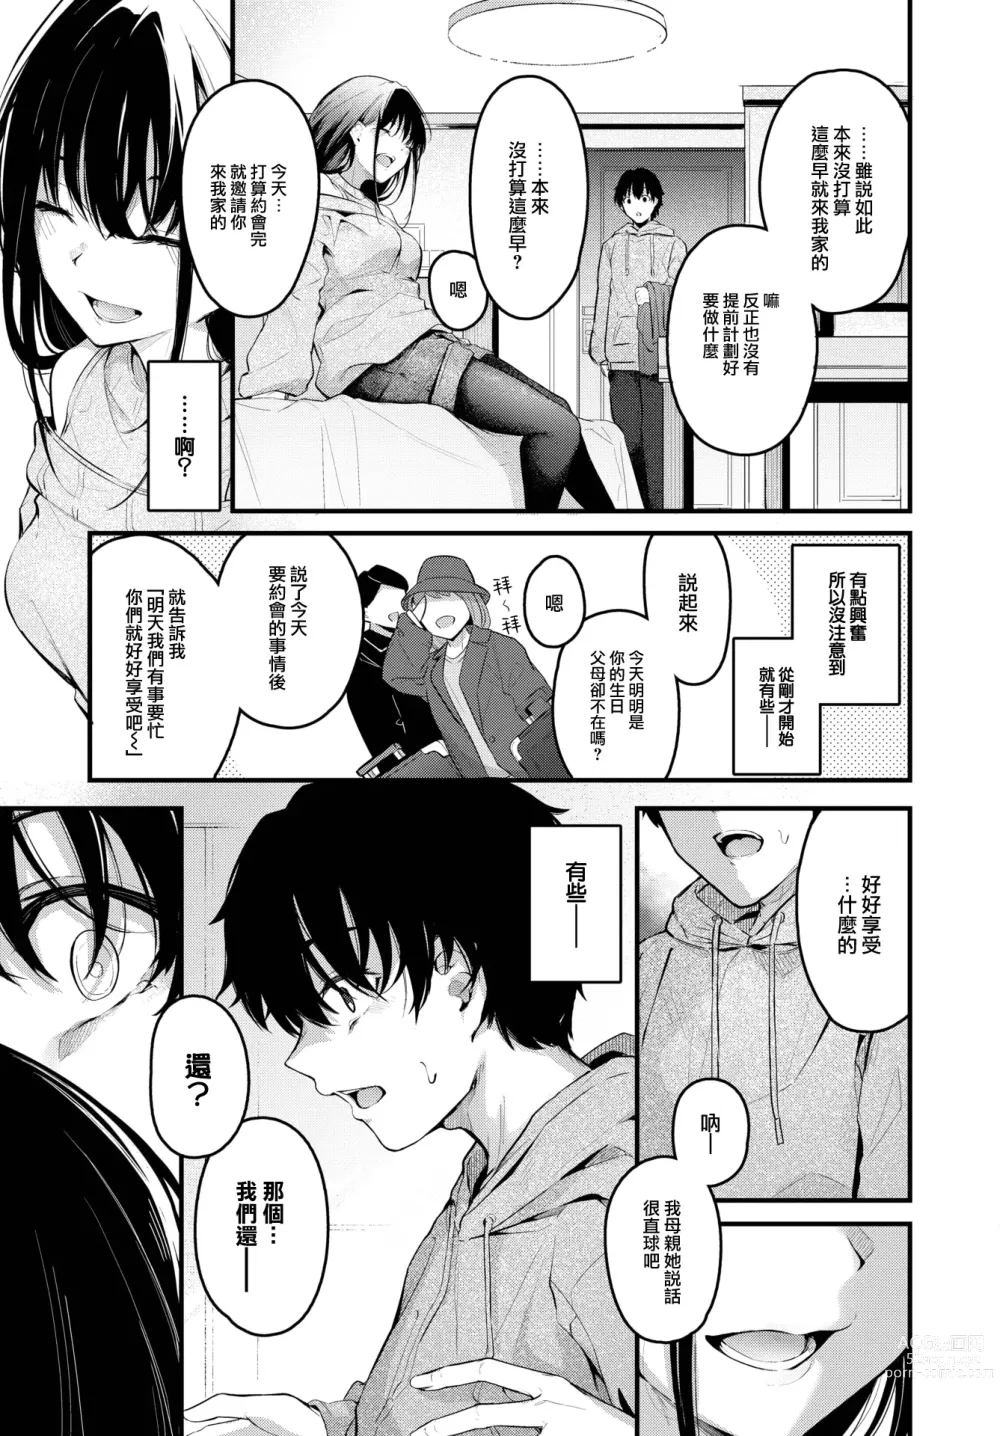 Page 4 of manga Murashigure